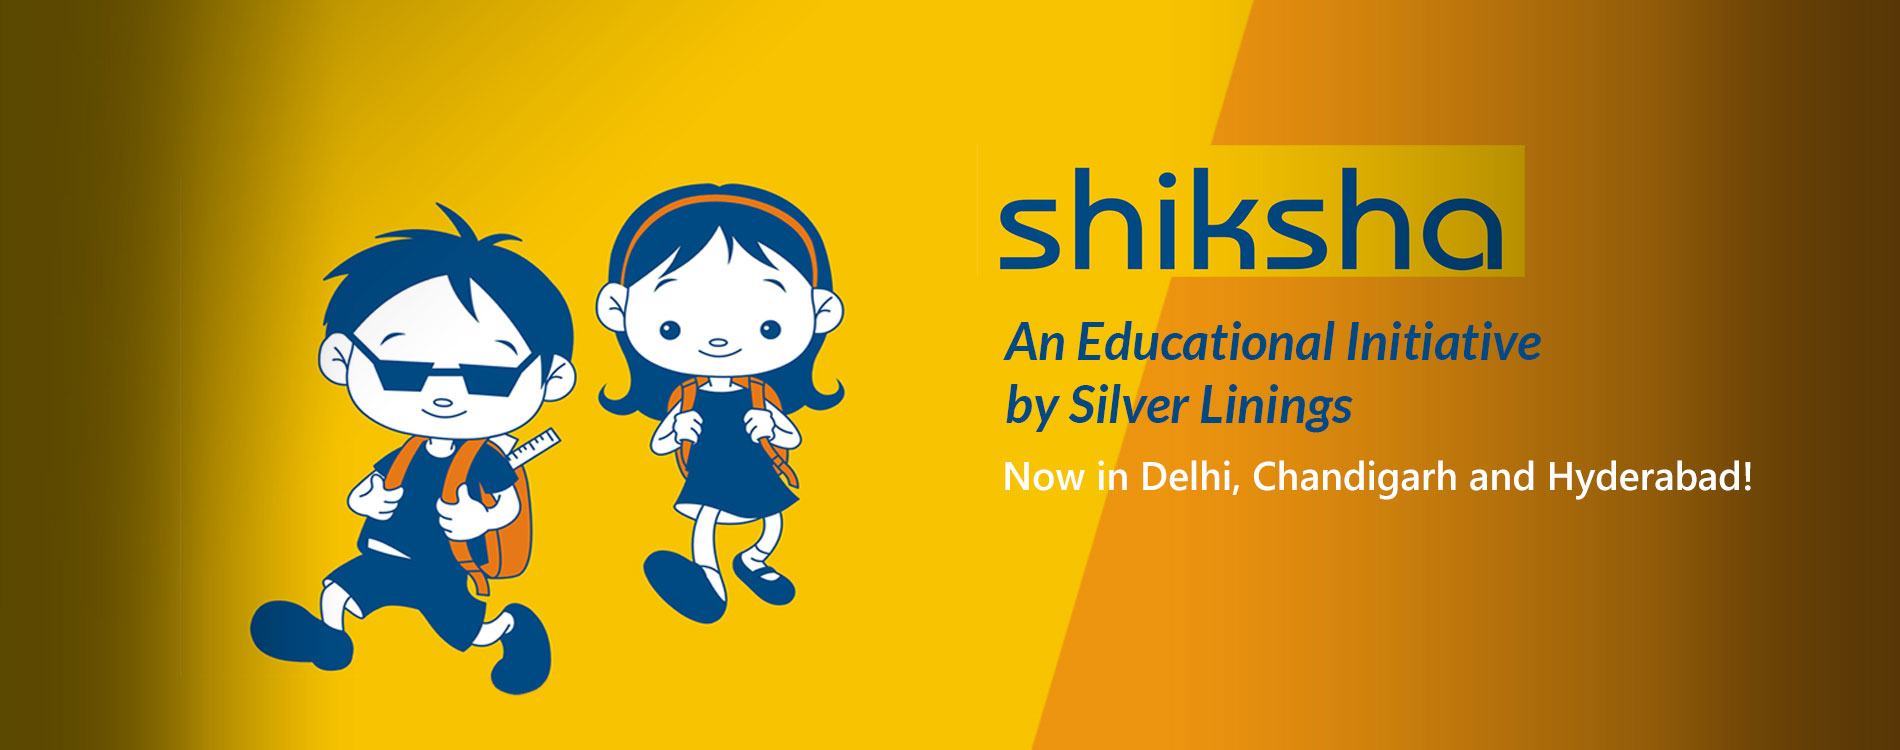 Shiksha- An educational initiative by Silver Linings